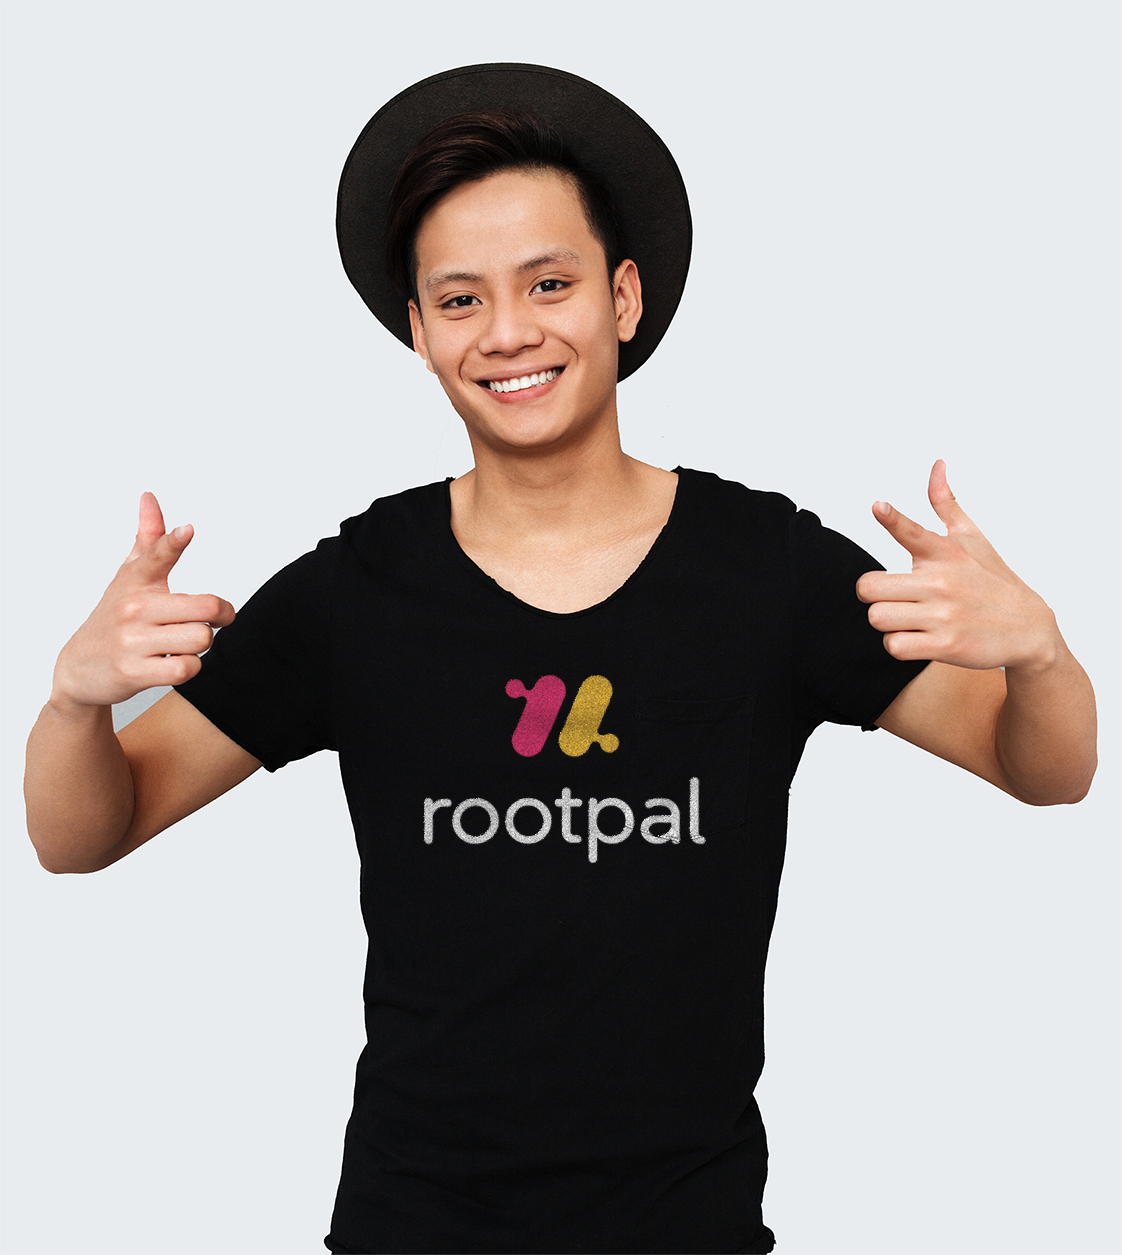 rootpal customer service 3